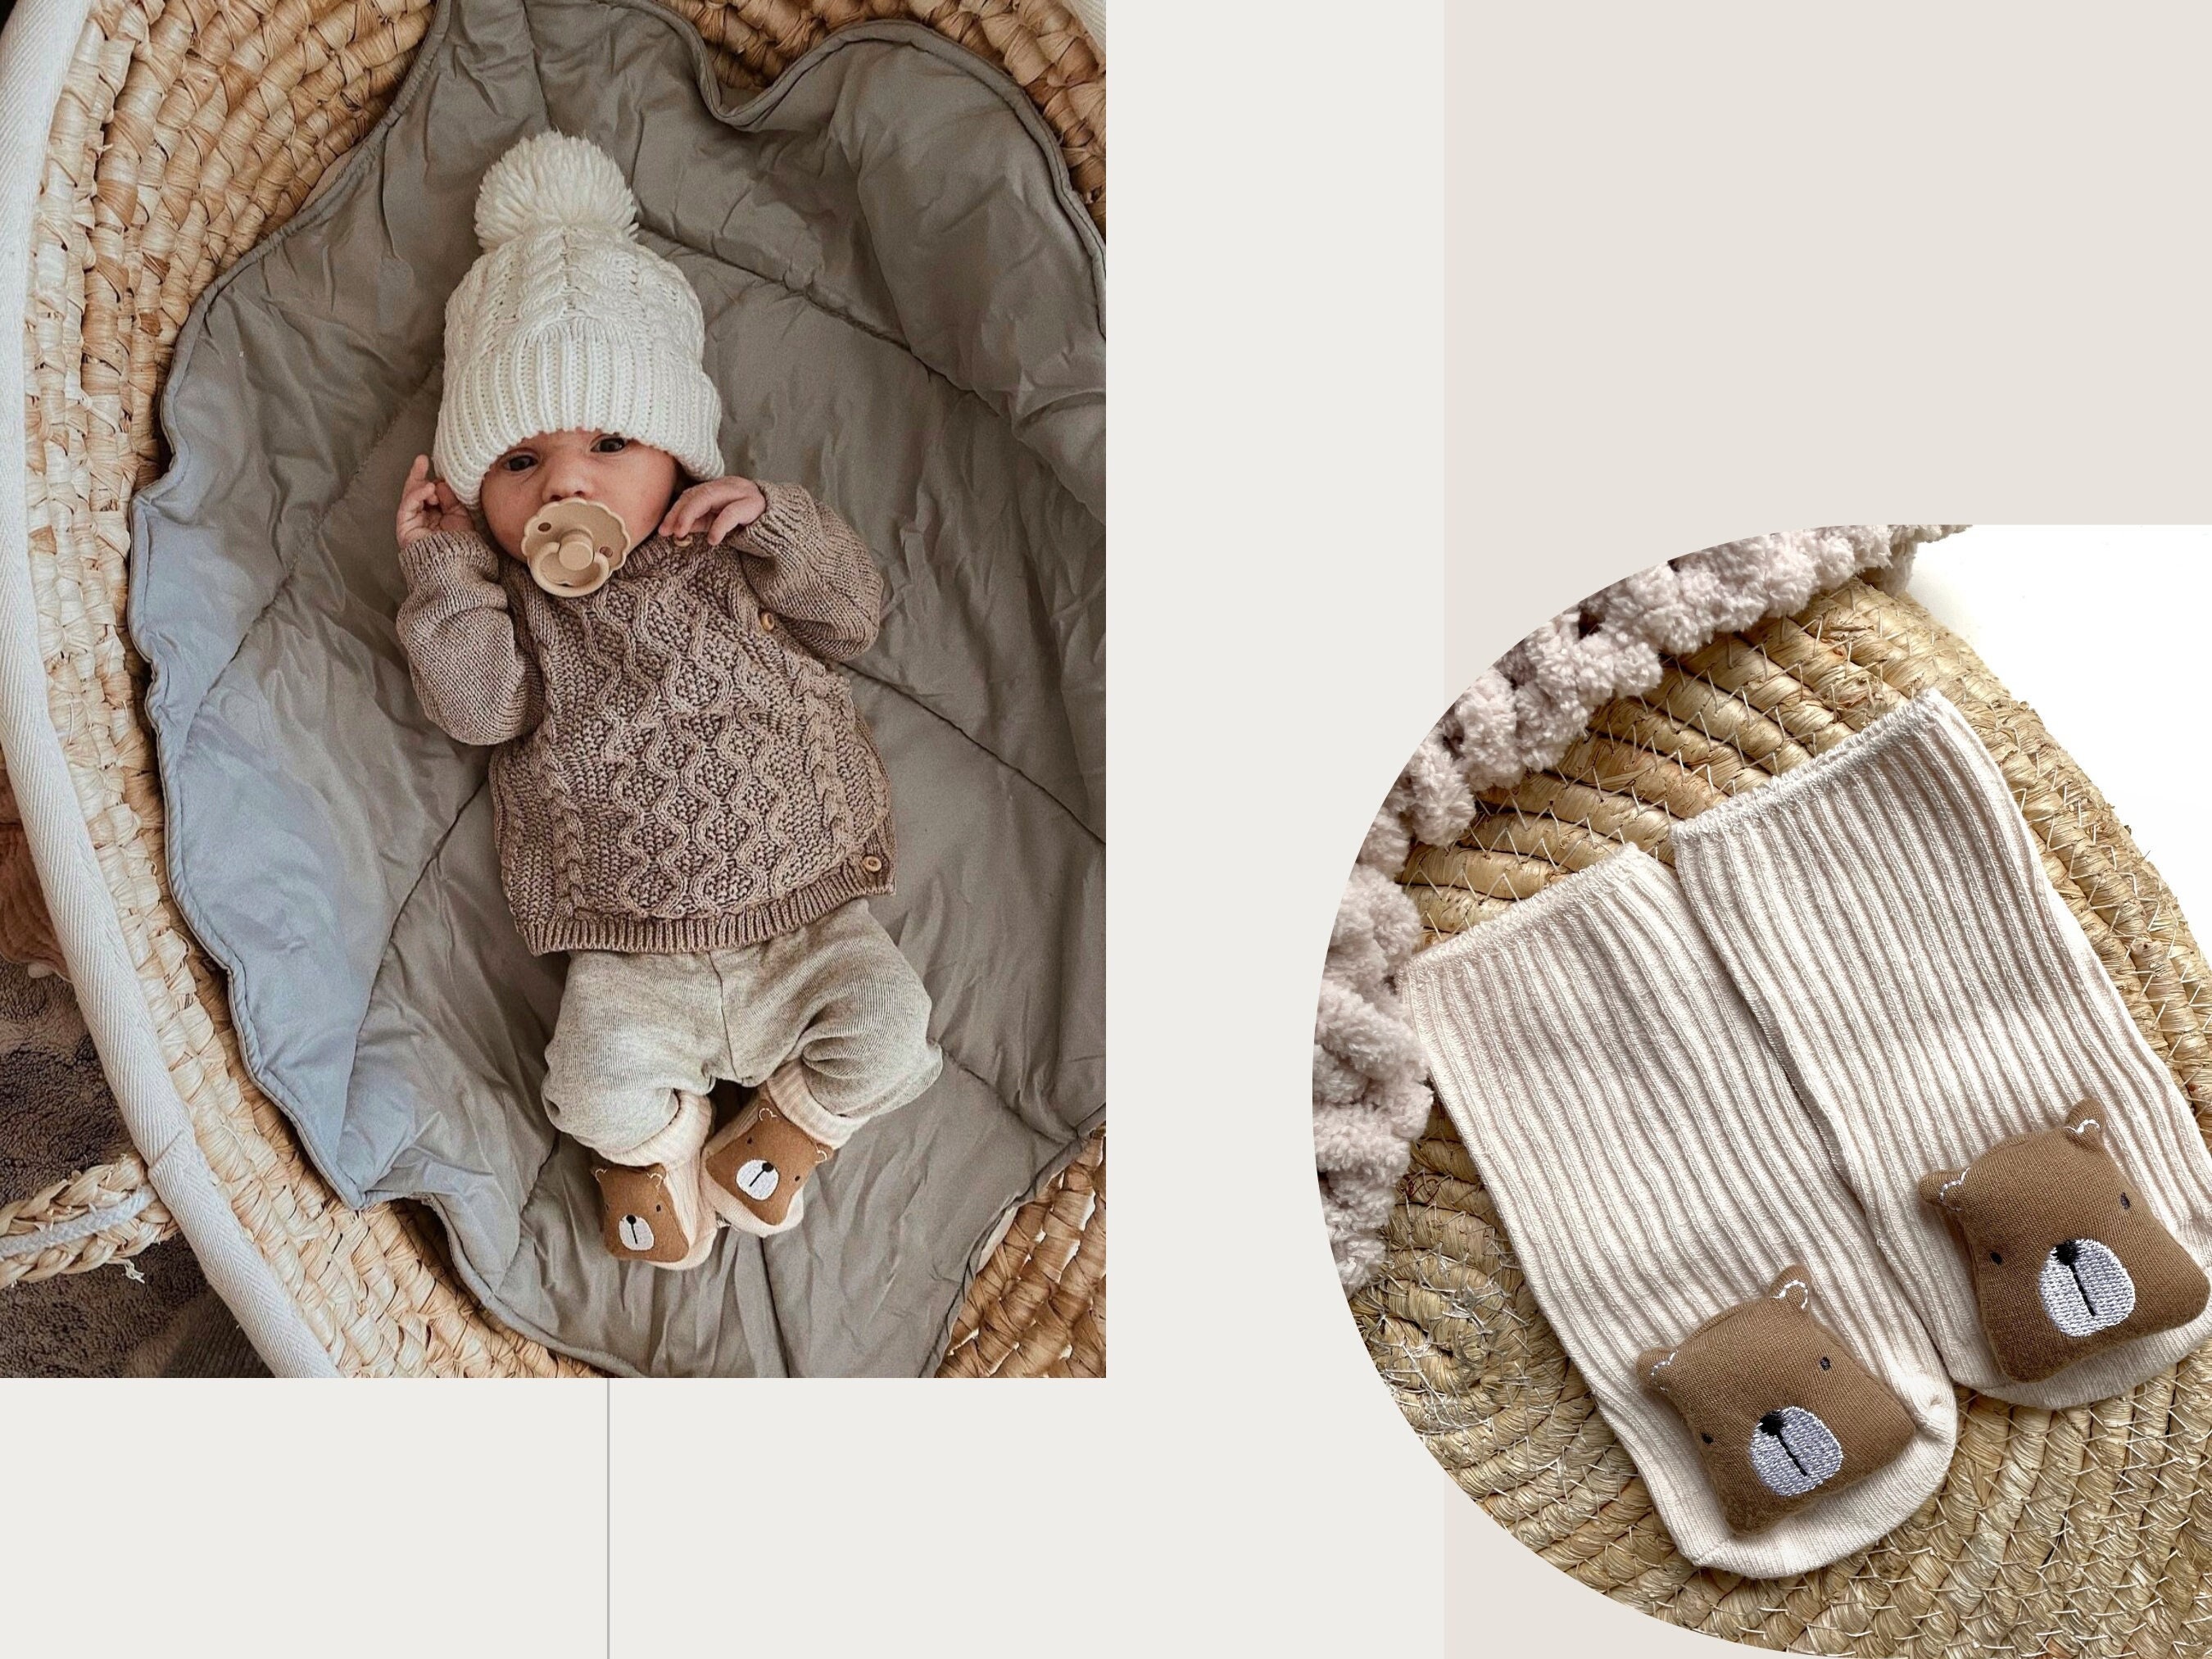 Socks Of Baby Cute Animal With Rubber Anti Slip Sole – 1lovebaby